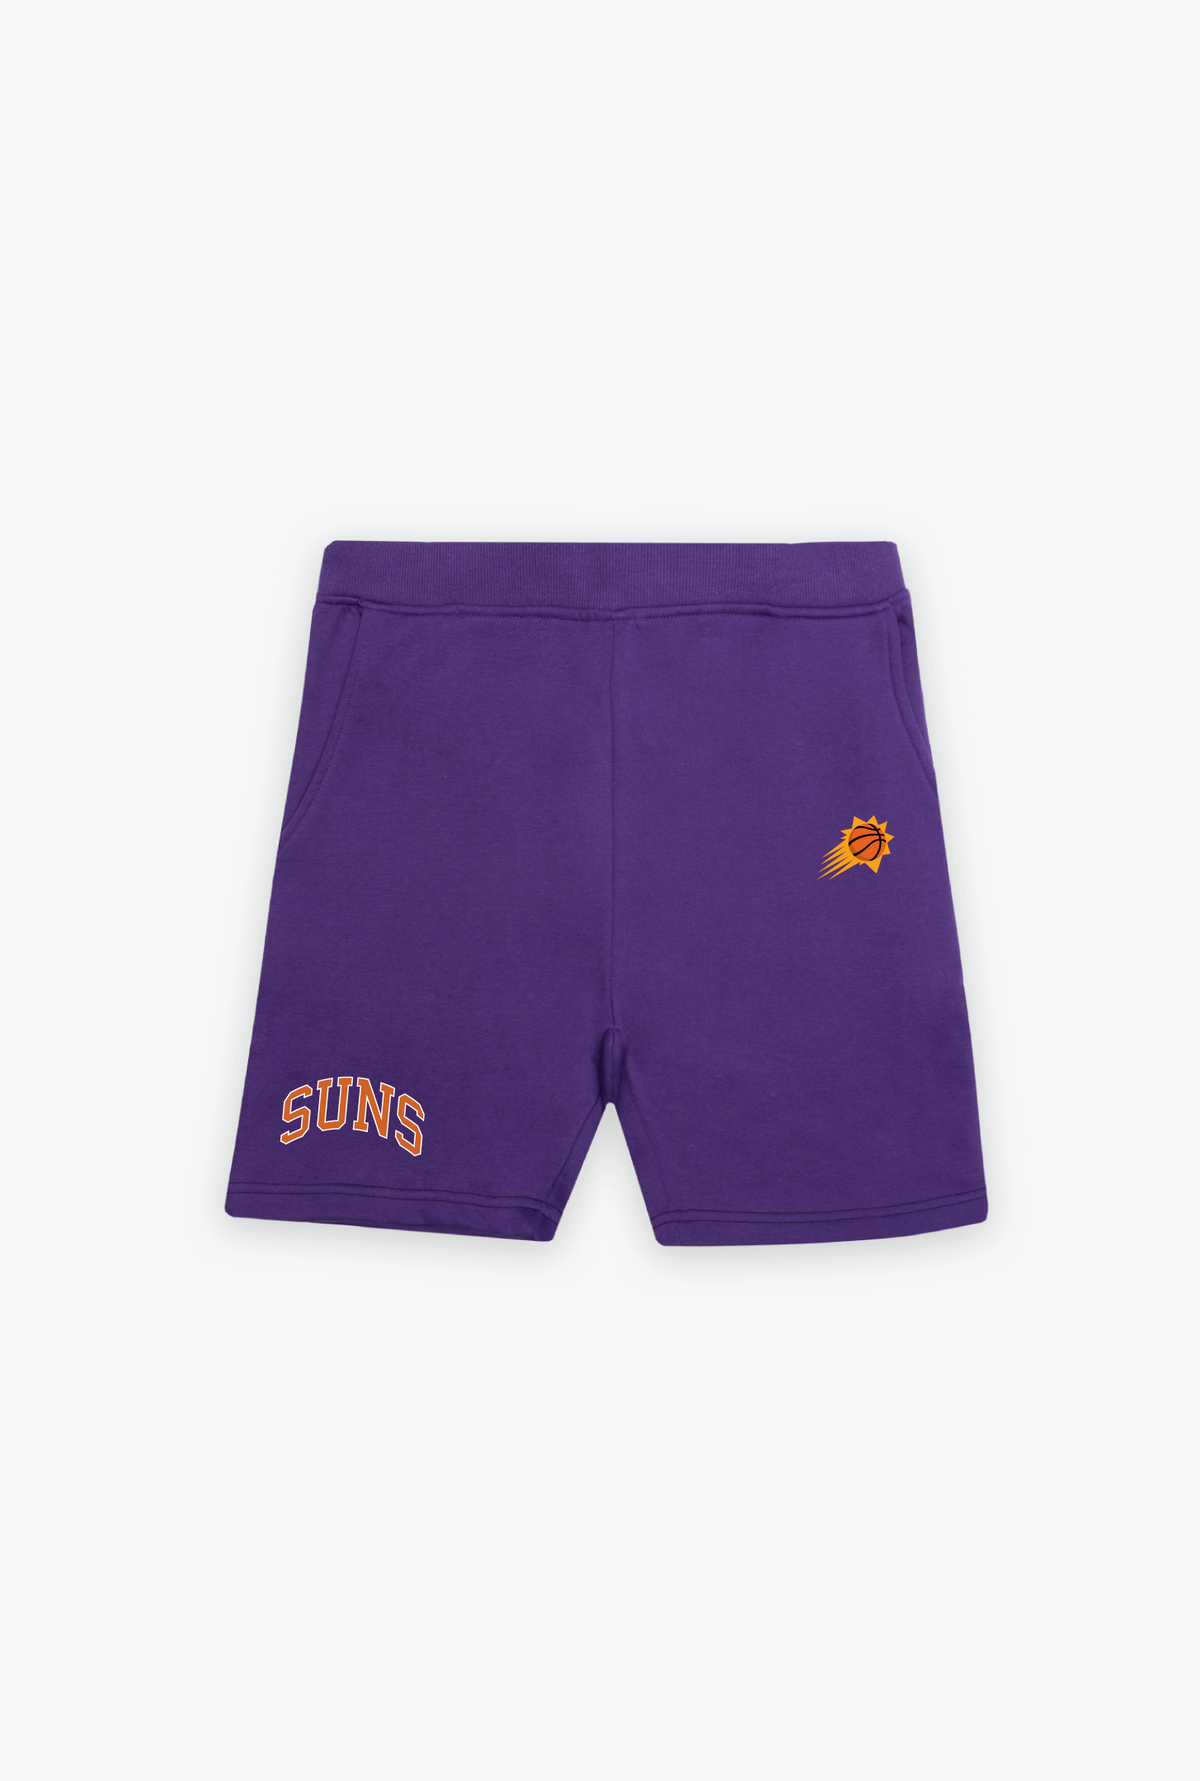 Phoenix Suns Playoffs Fleece Shorts - Purple